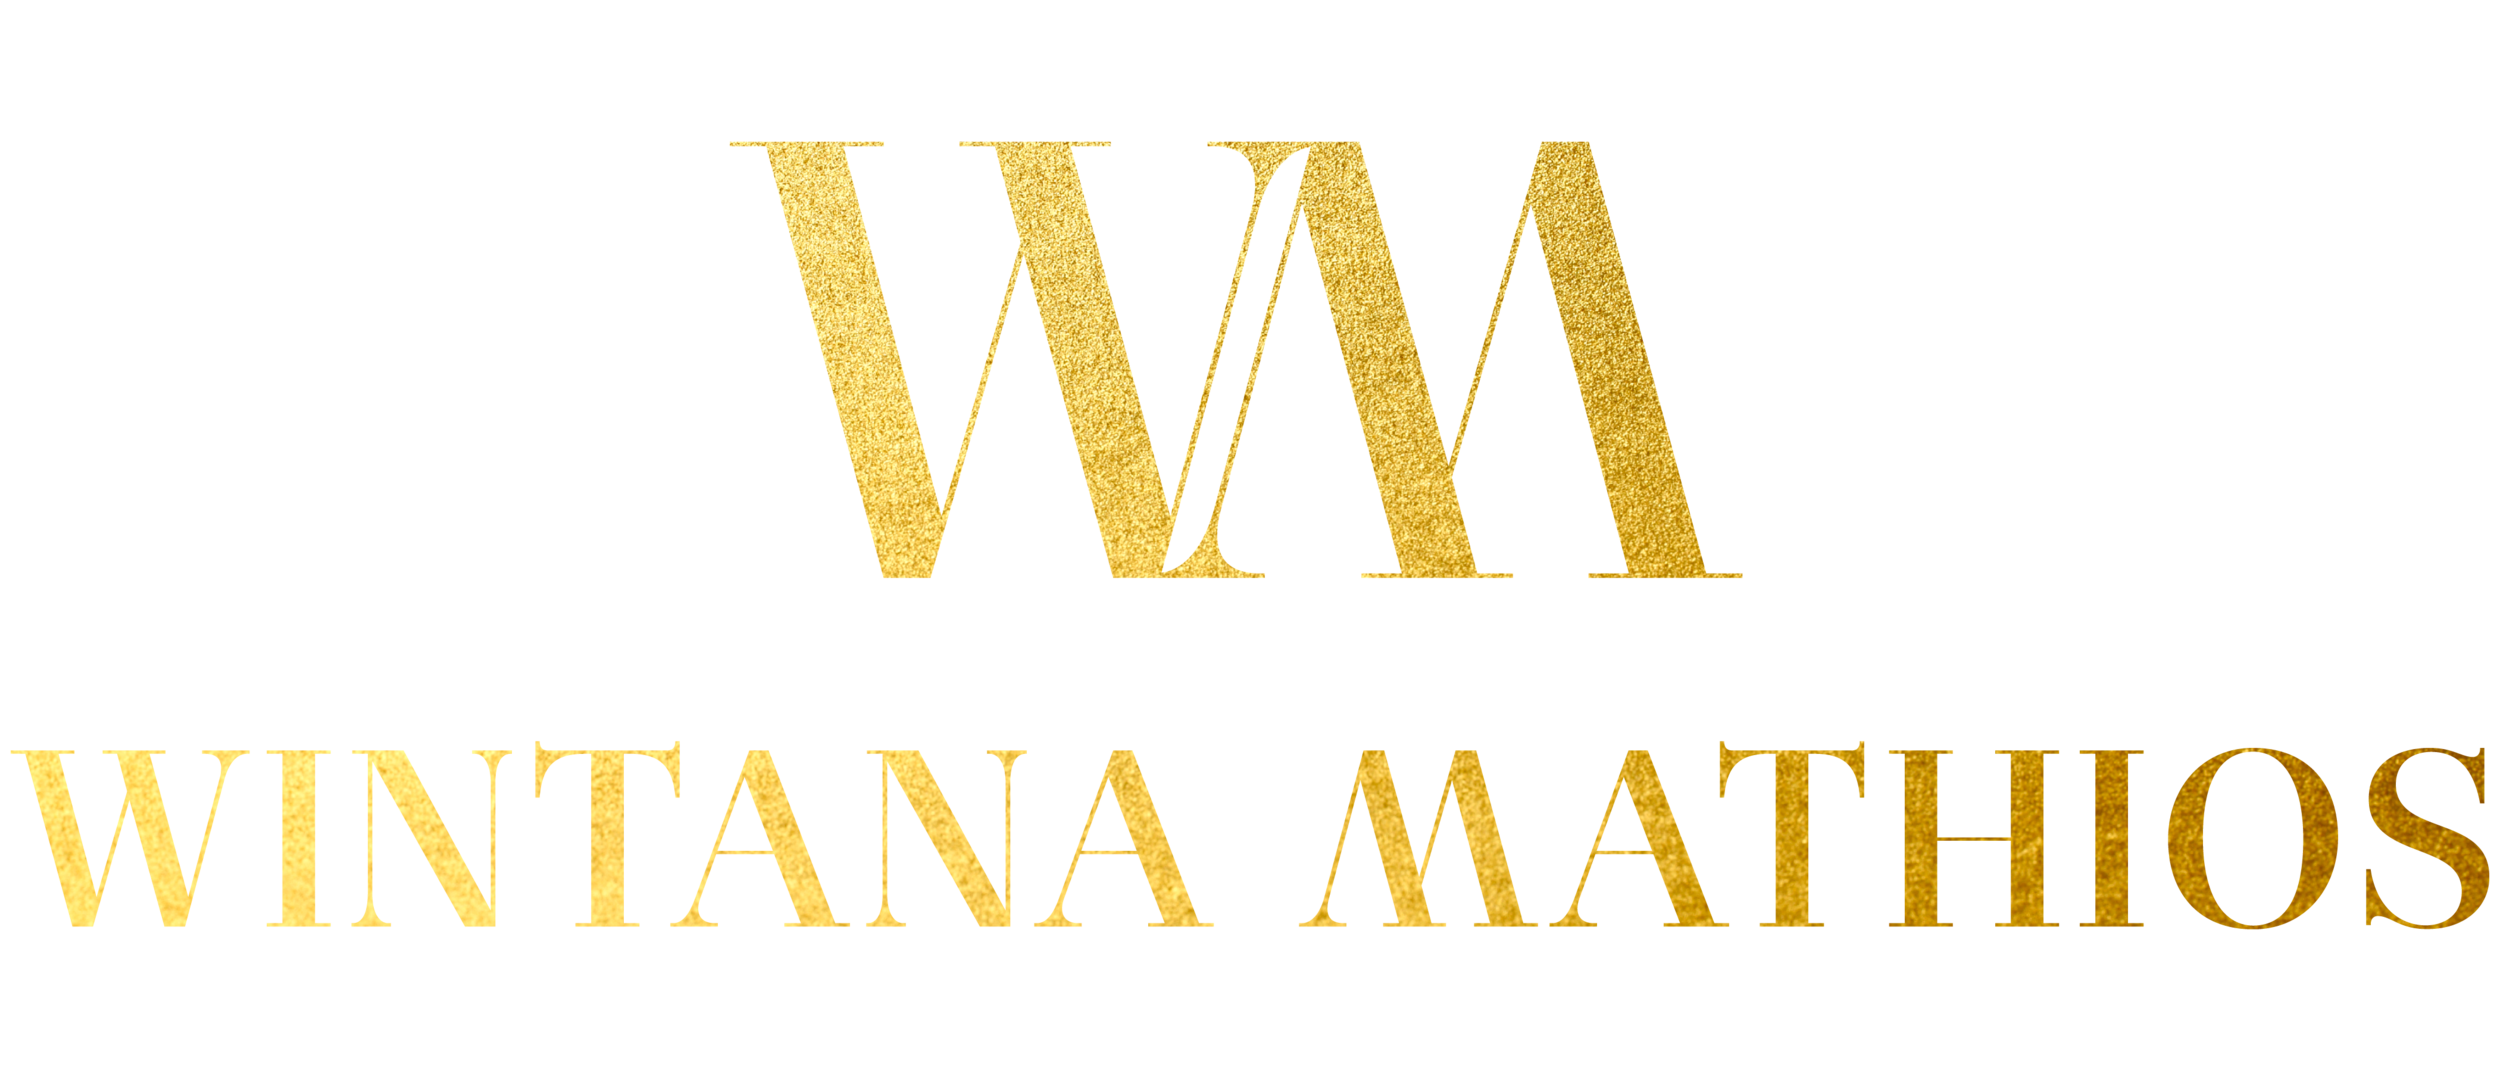 Wintana Mathios | Luxury Evening Wear